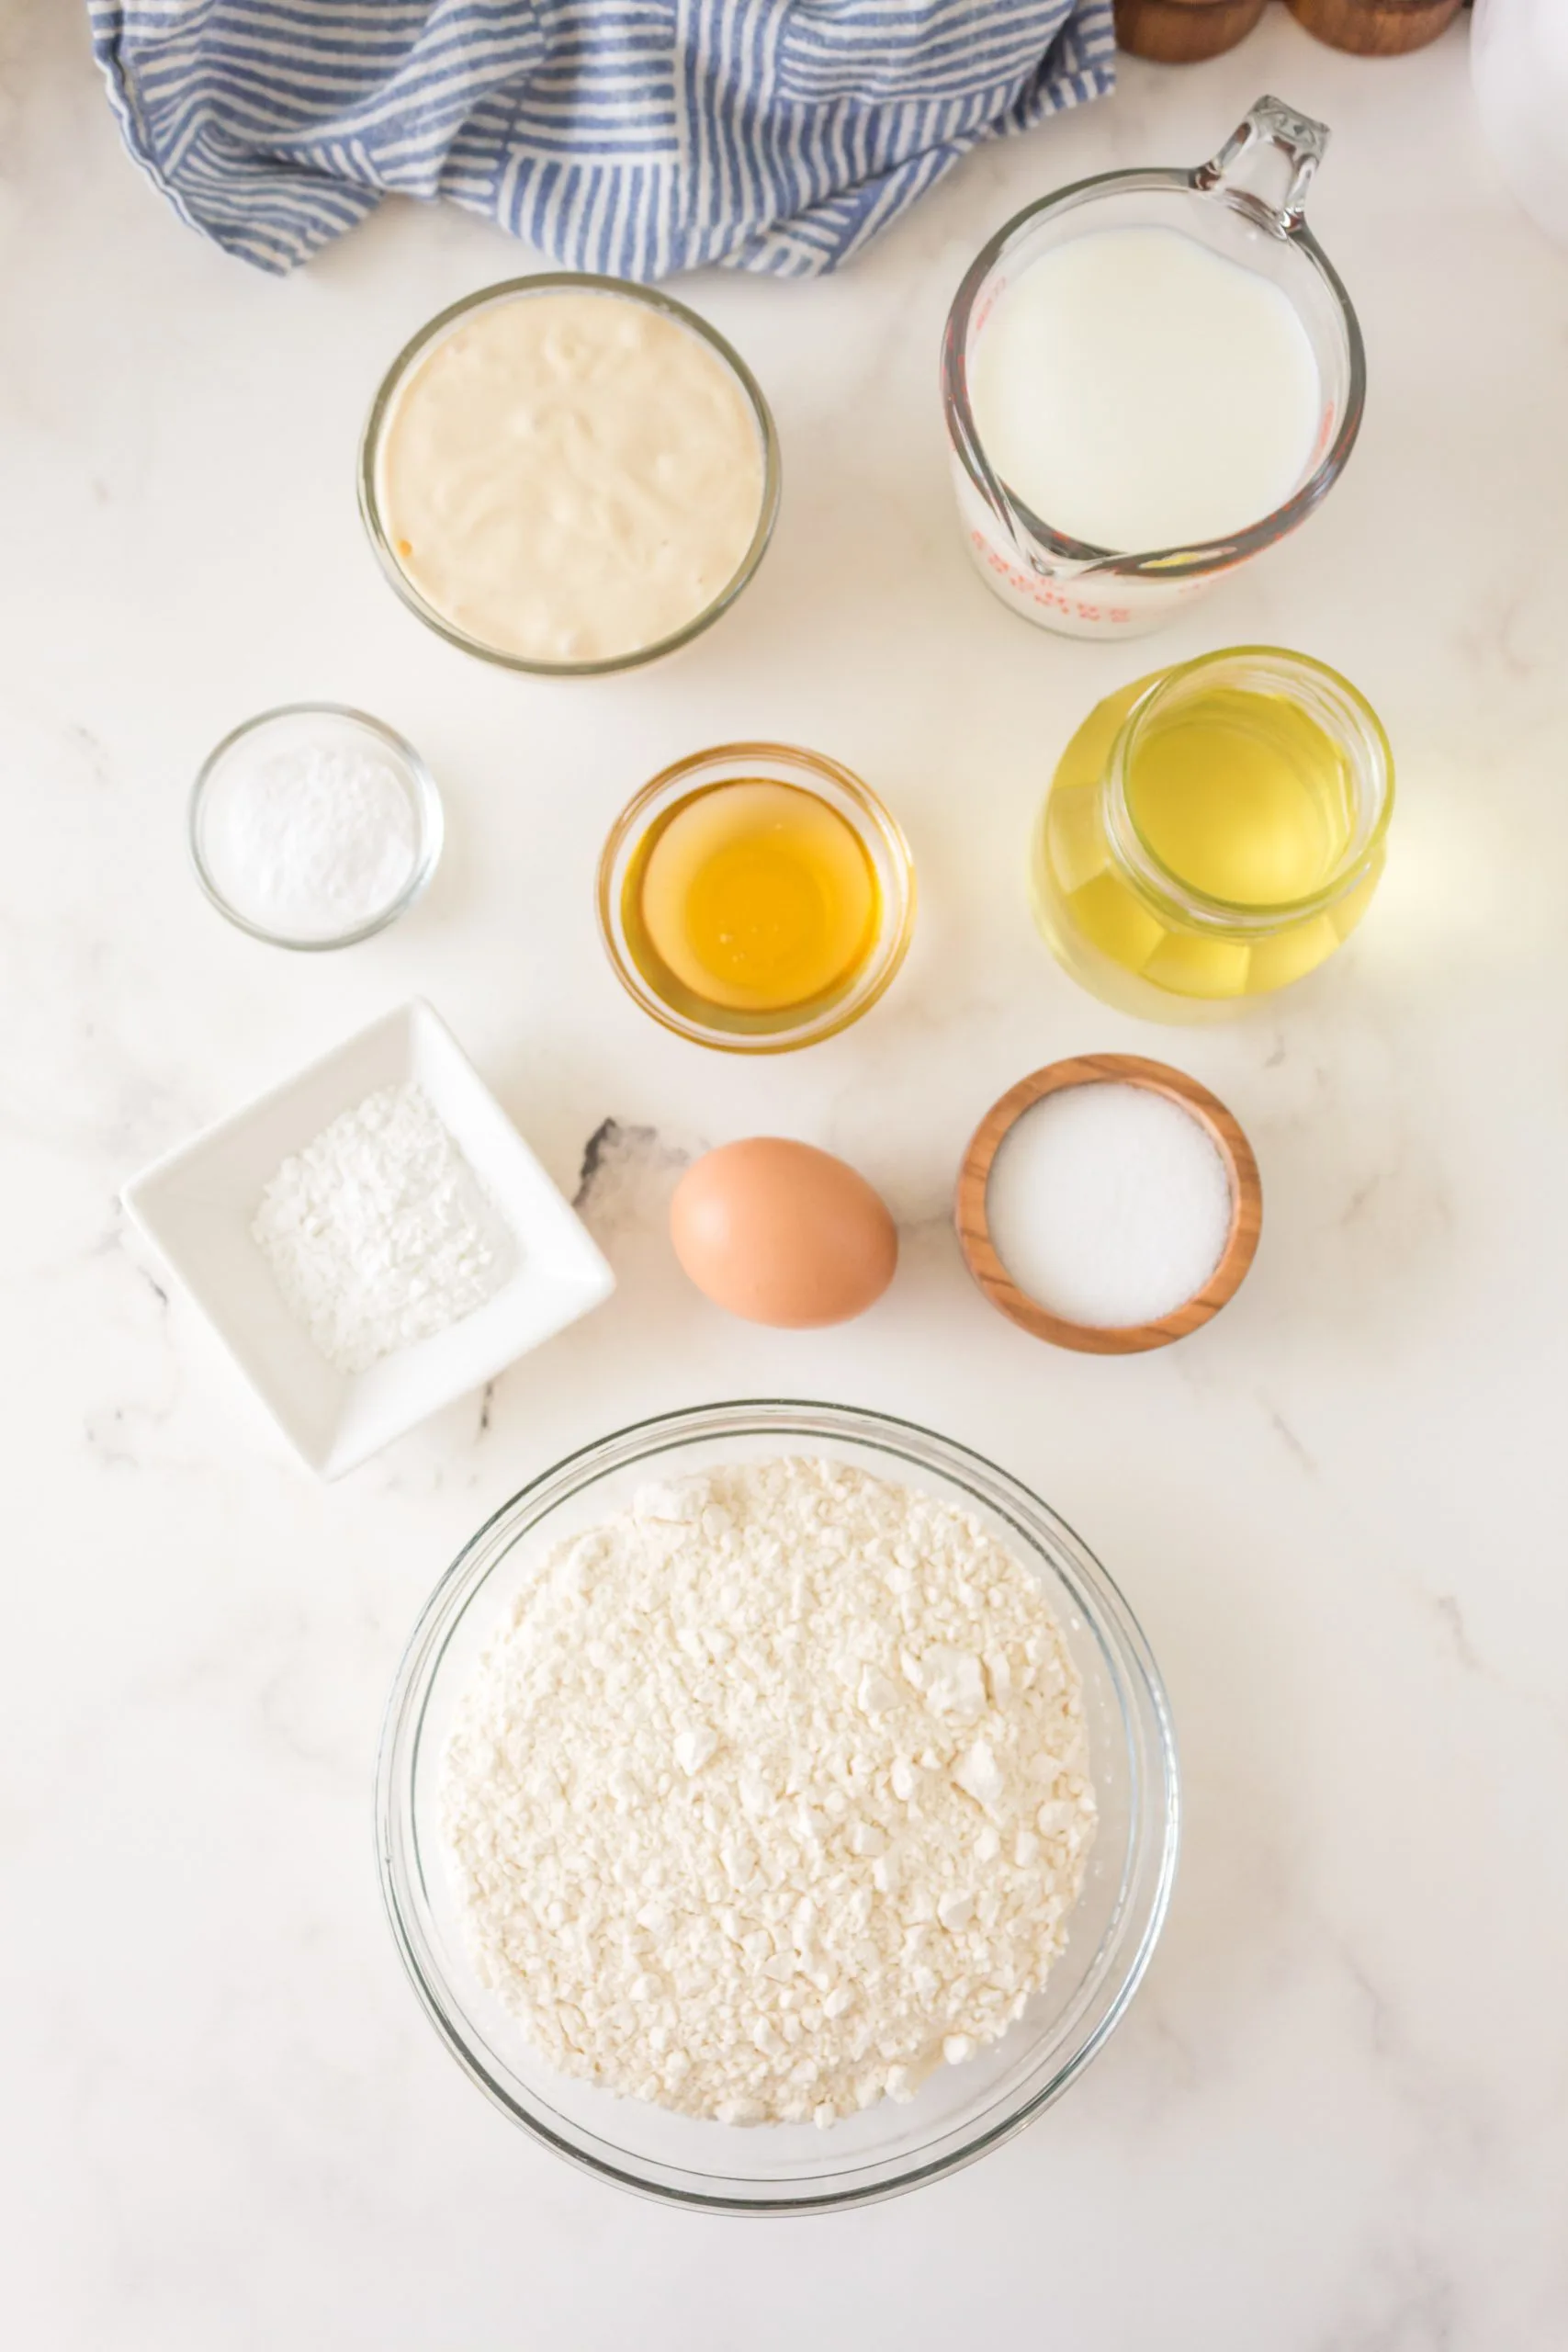 Ingredients used to make Sourdough Pancakes including sourdough starter, egg, salt, honey, oil, flour, baking powder and baking soda.